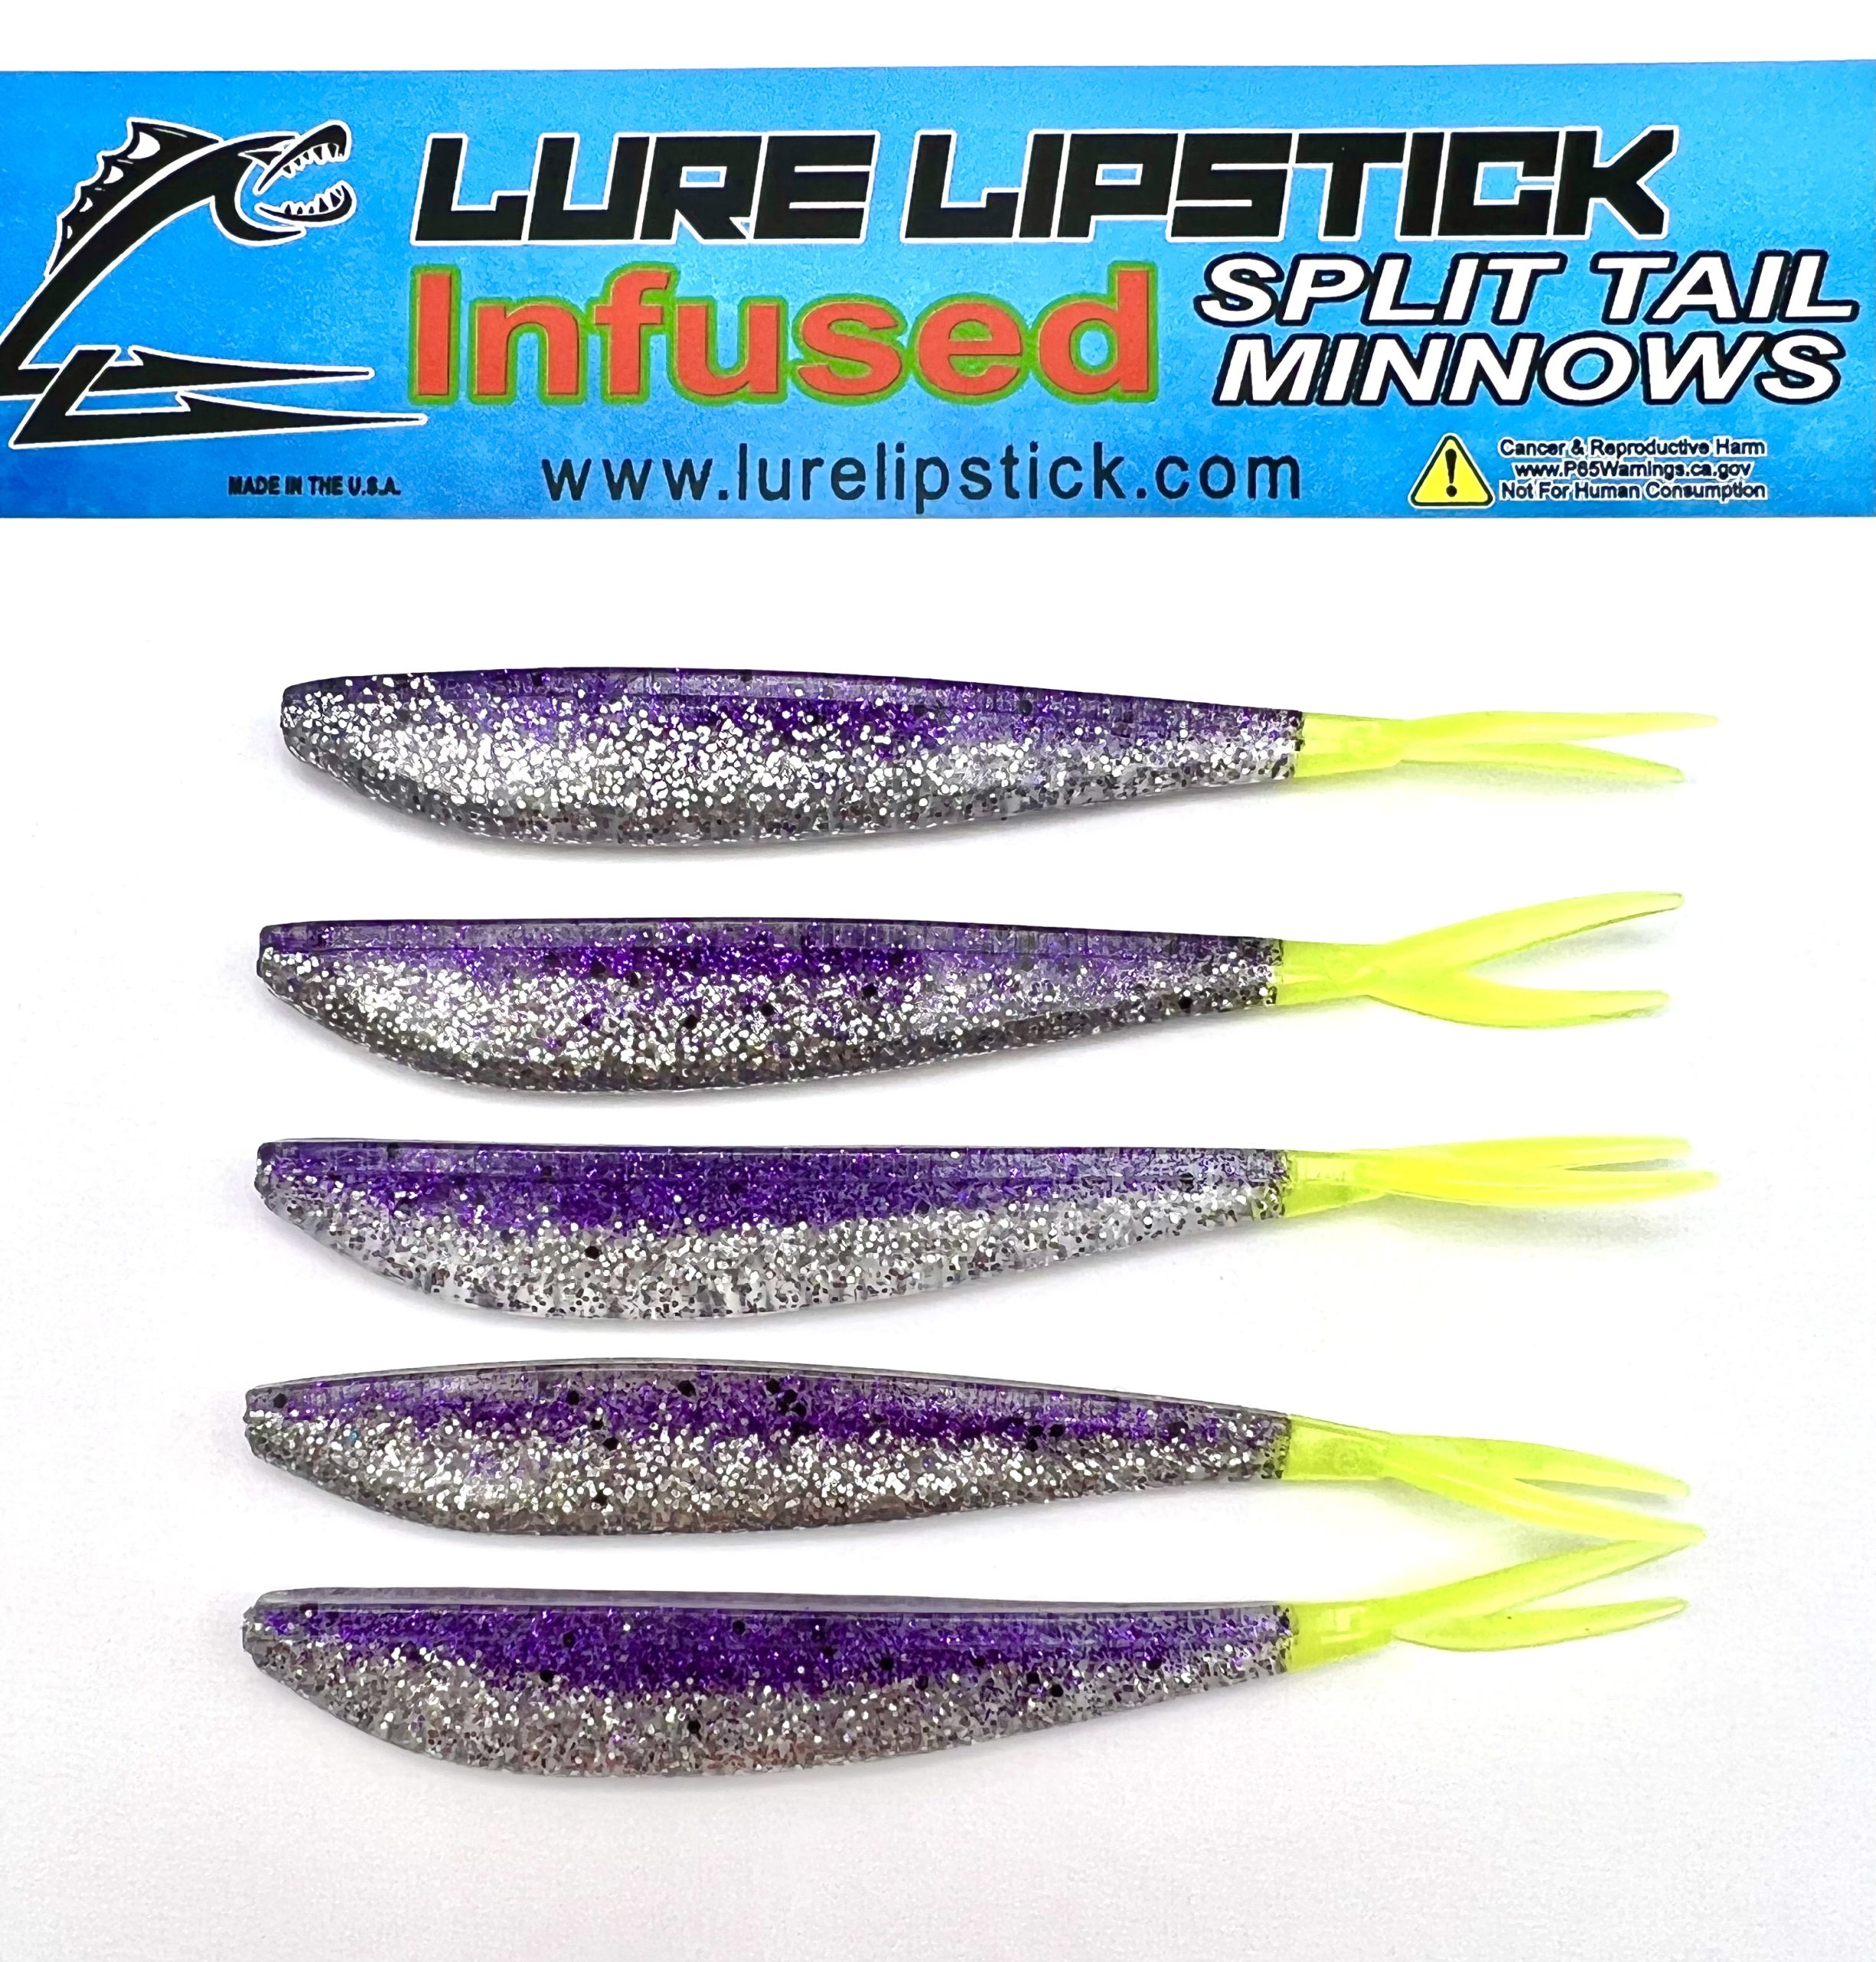 4in 5 Pack Custom Split Tail Minnows – Purple Ice Chartreuse Tail